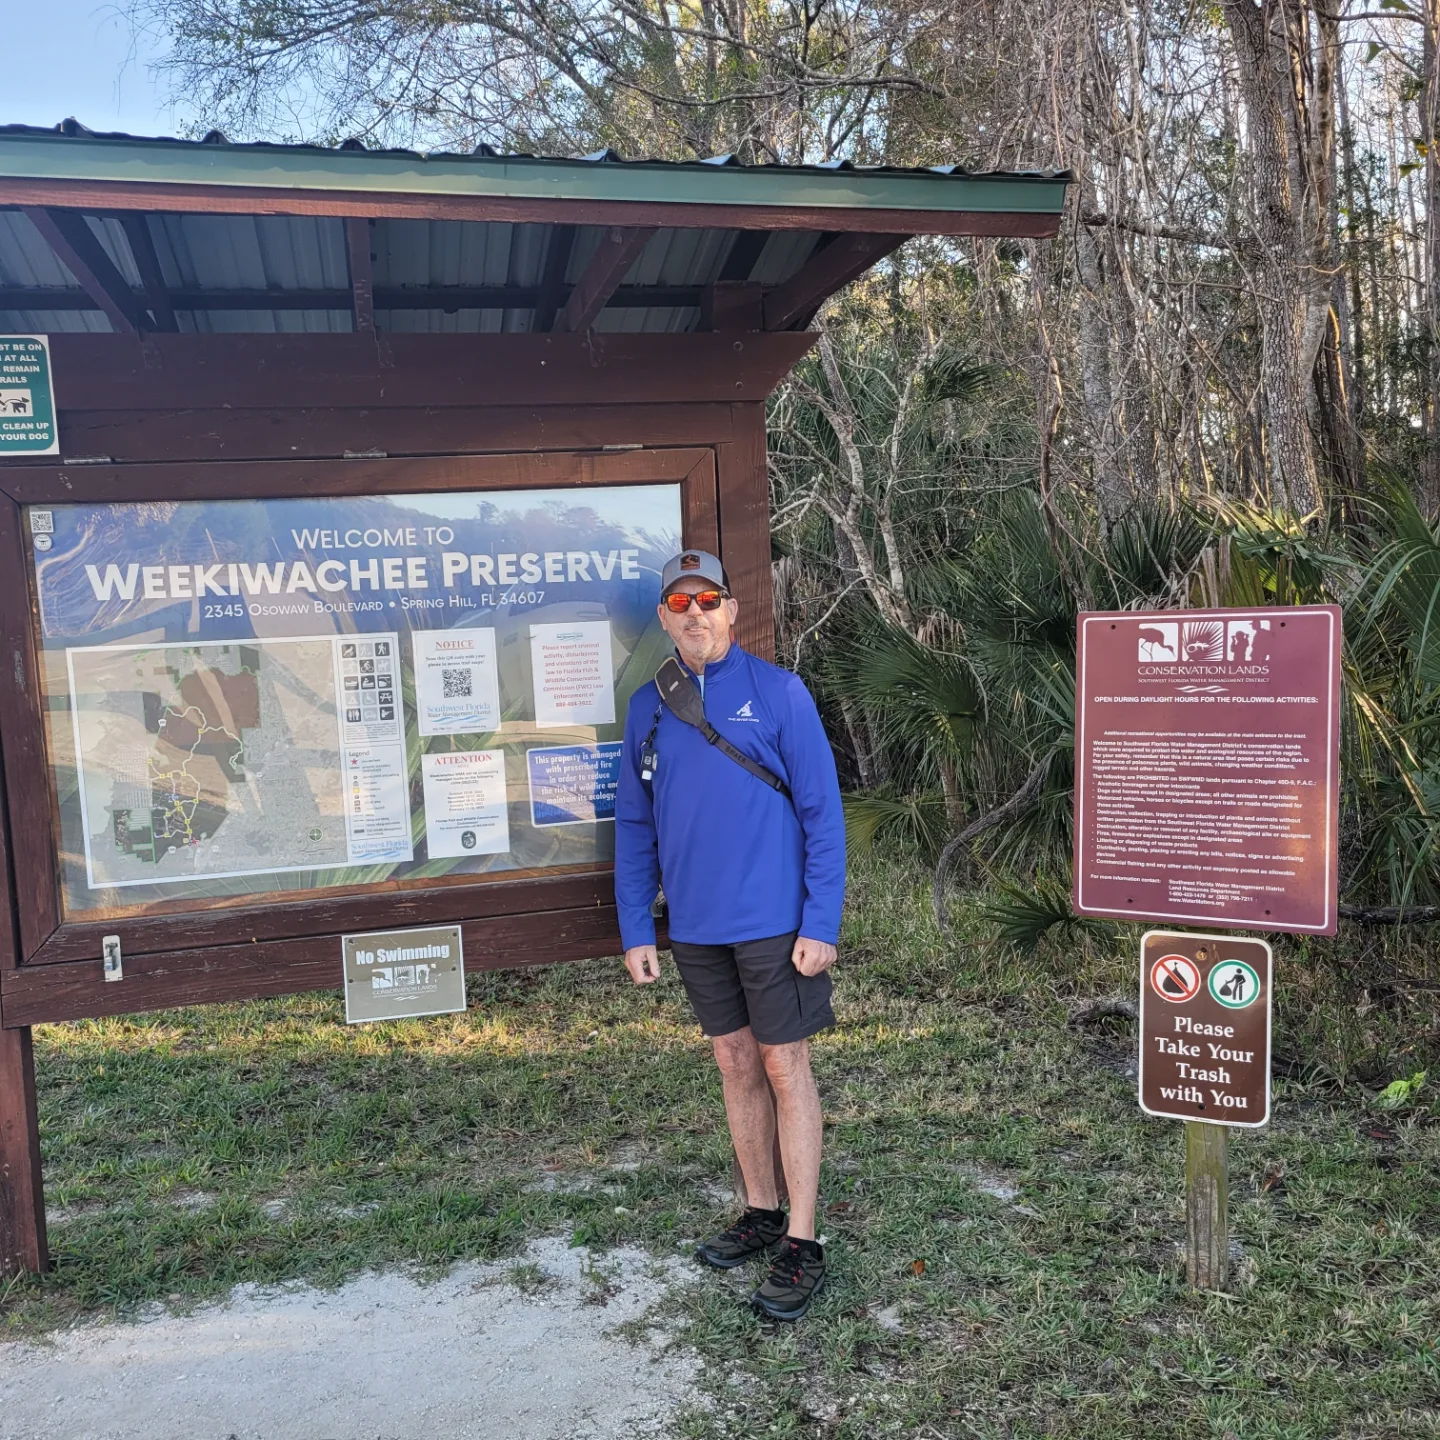 Weekiwachee Preserve Hike - Spring Hill, FL - 2/4/23